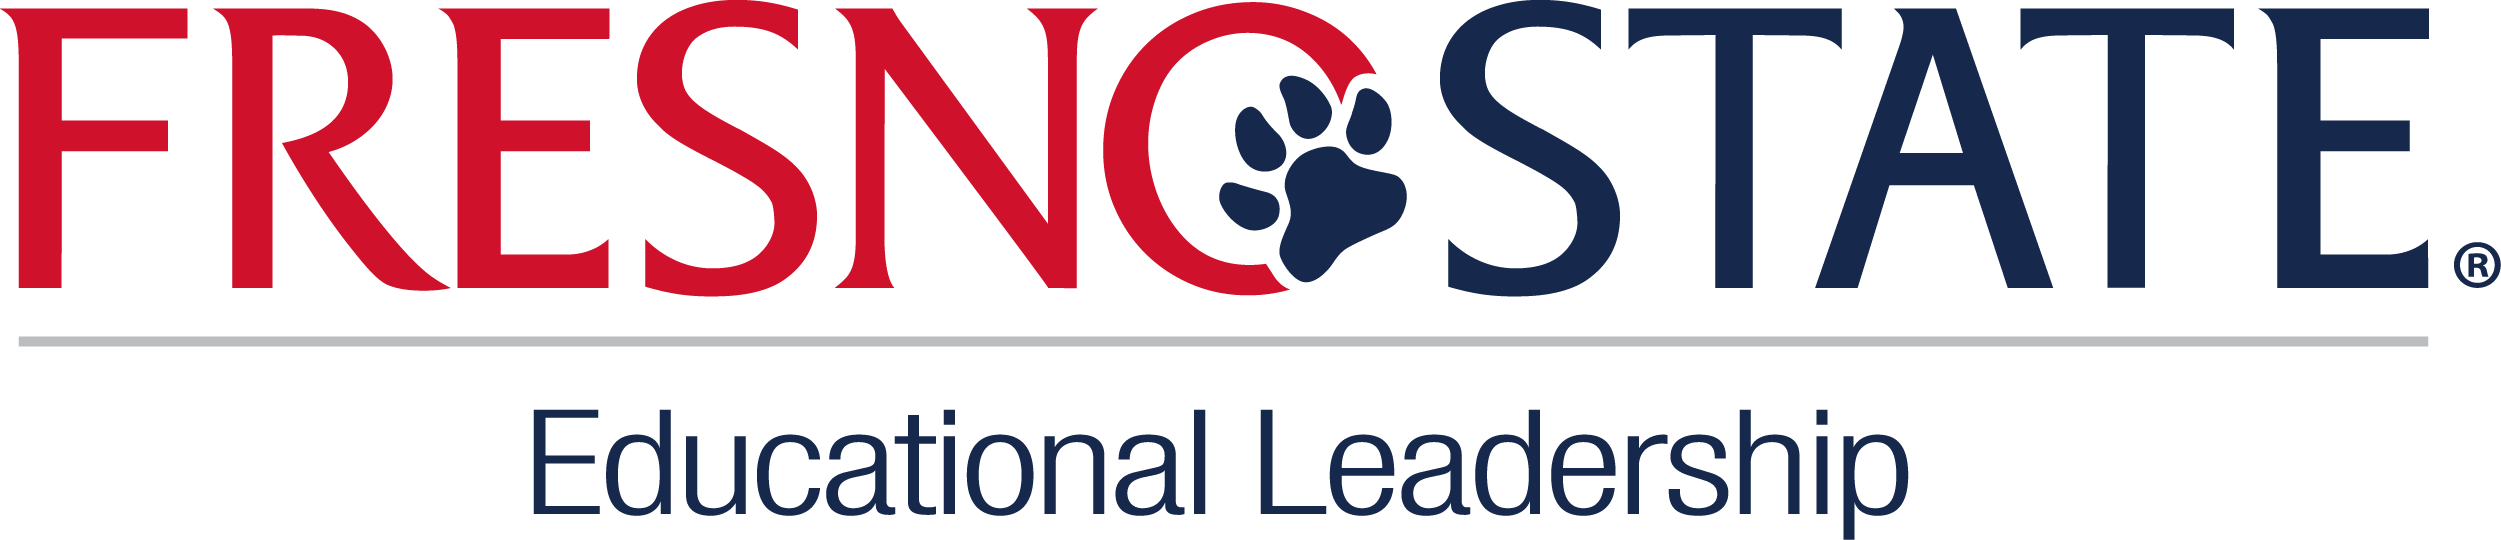 Educational Leadership Fresno State logo